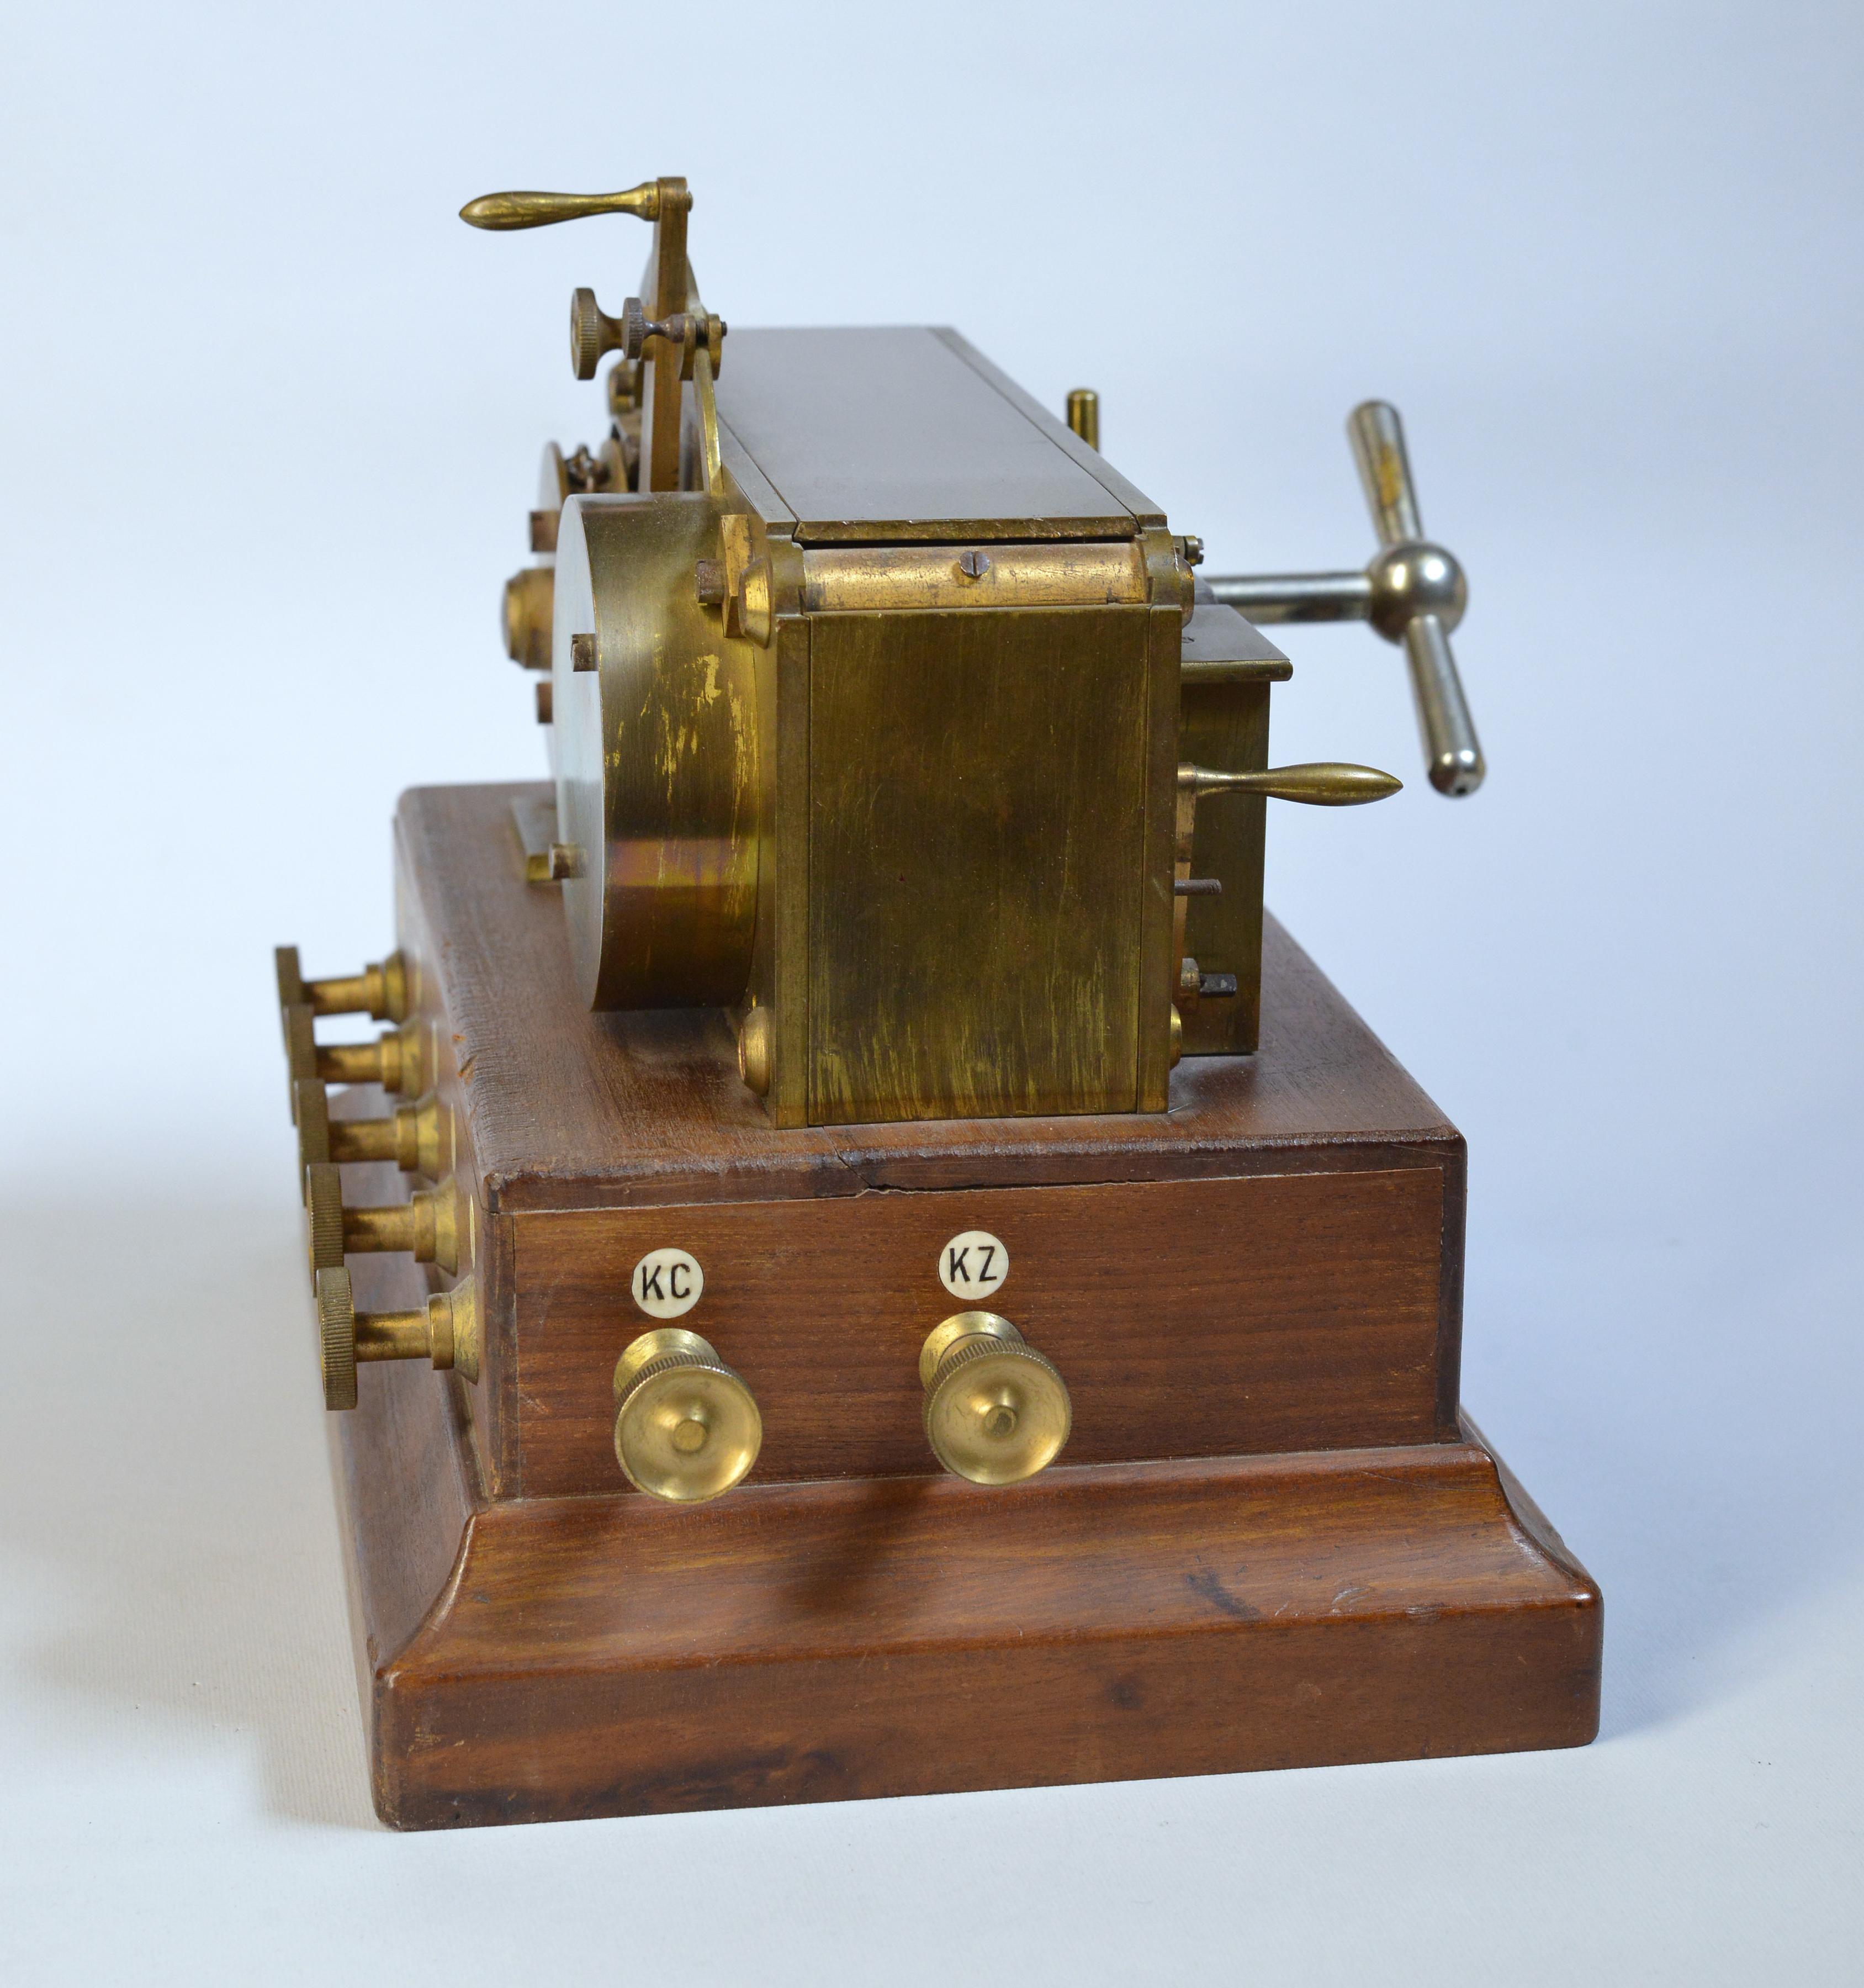 Antique Danish SNTS Morse Telegraph Register Wheatstone transmitter In Good Condition For Sale In Sweden, SE